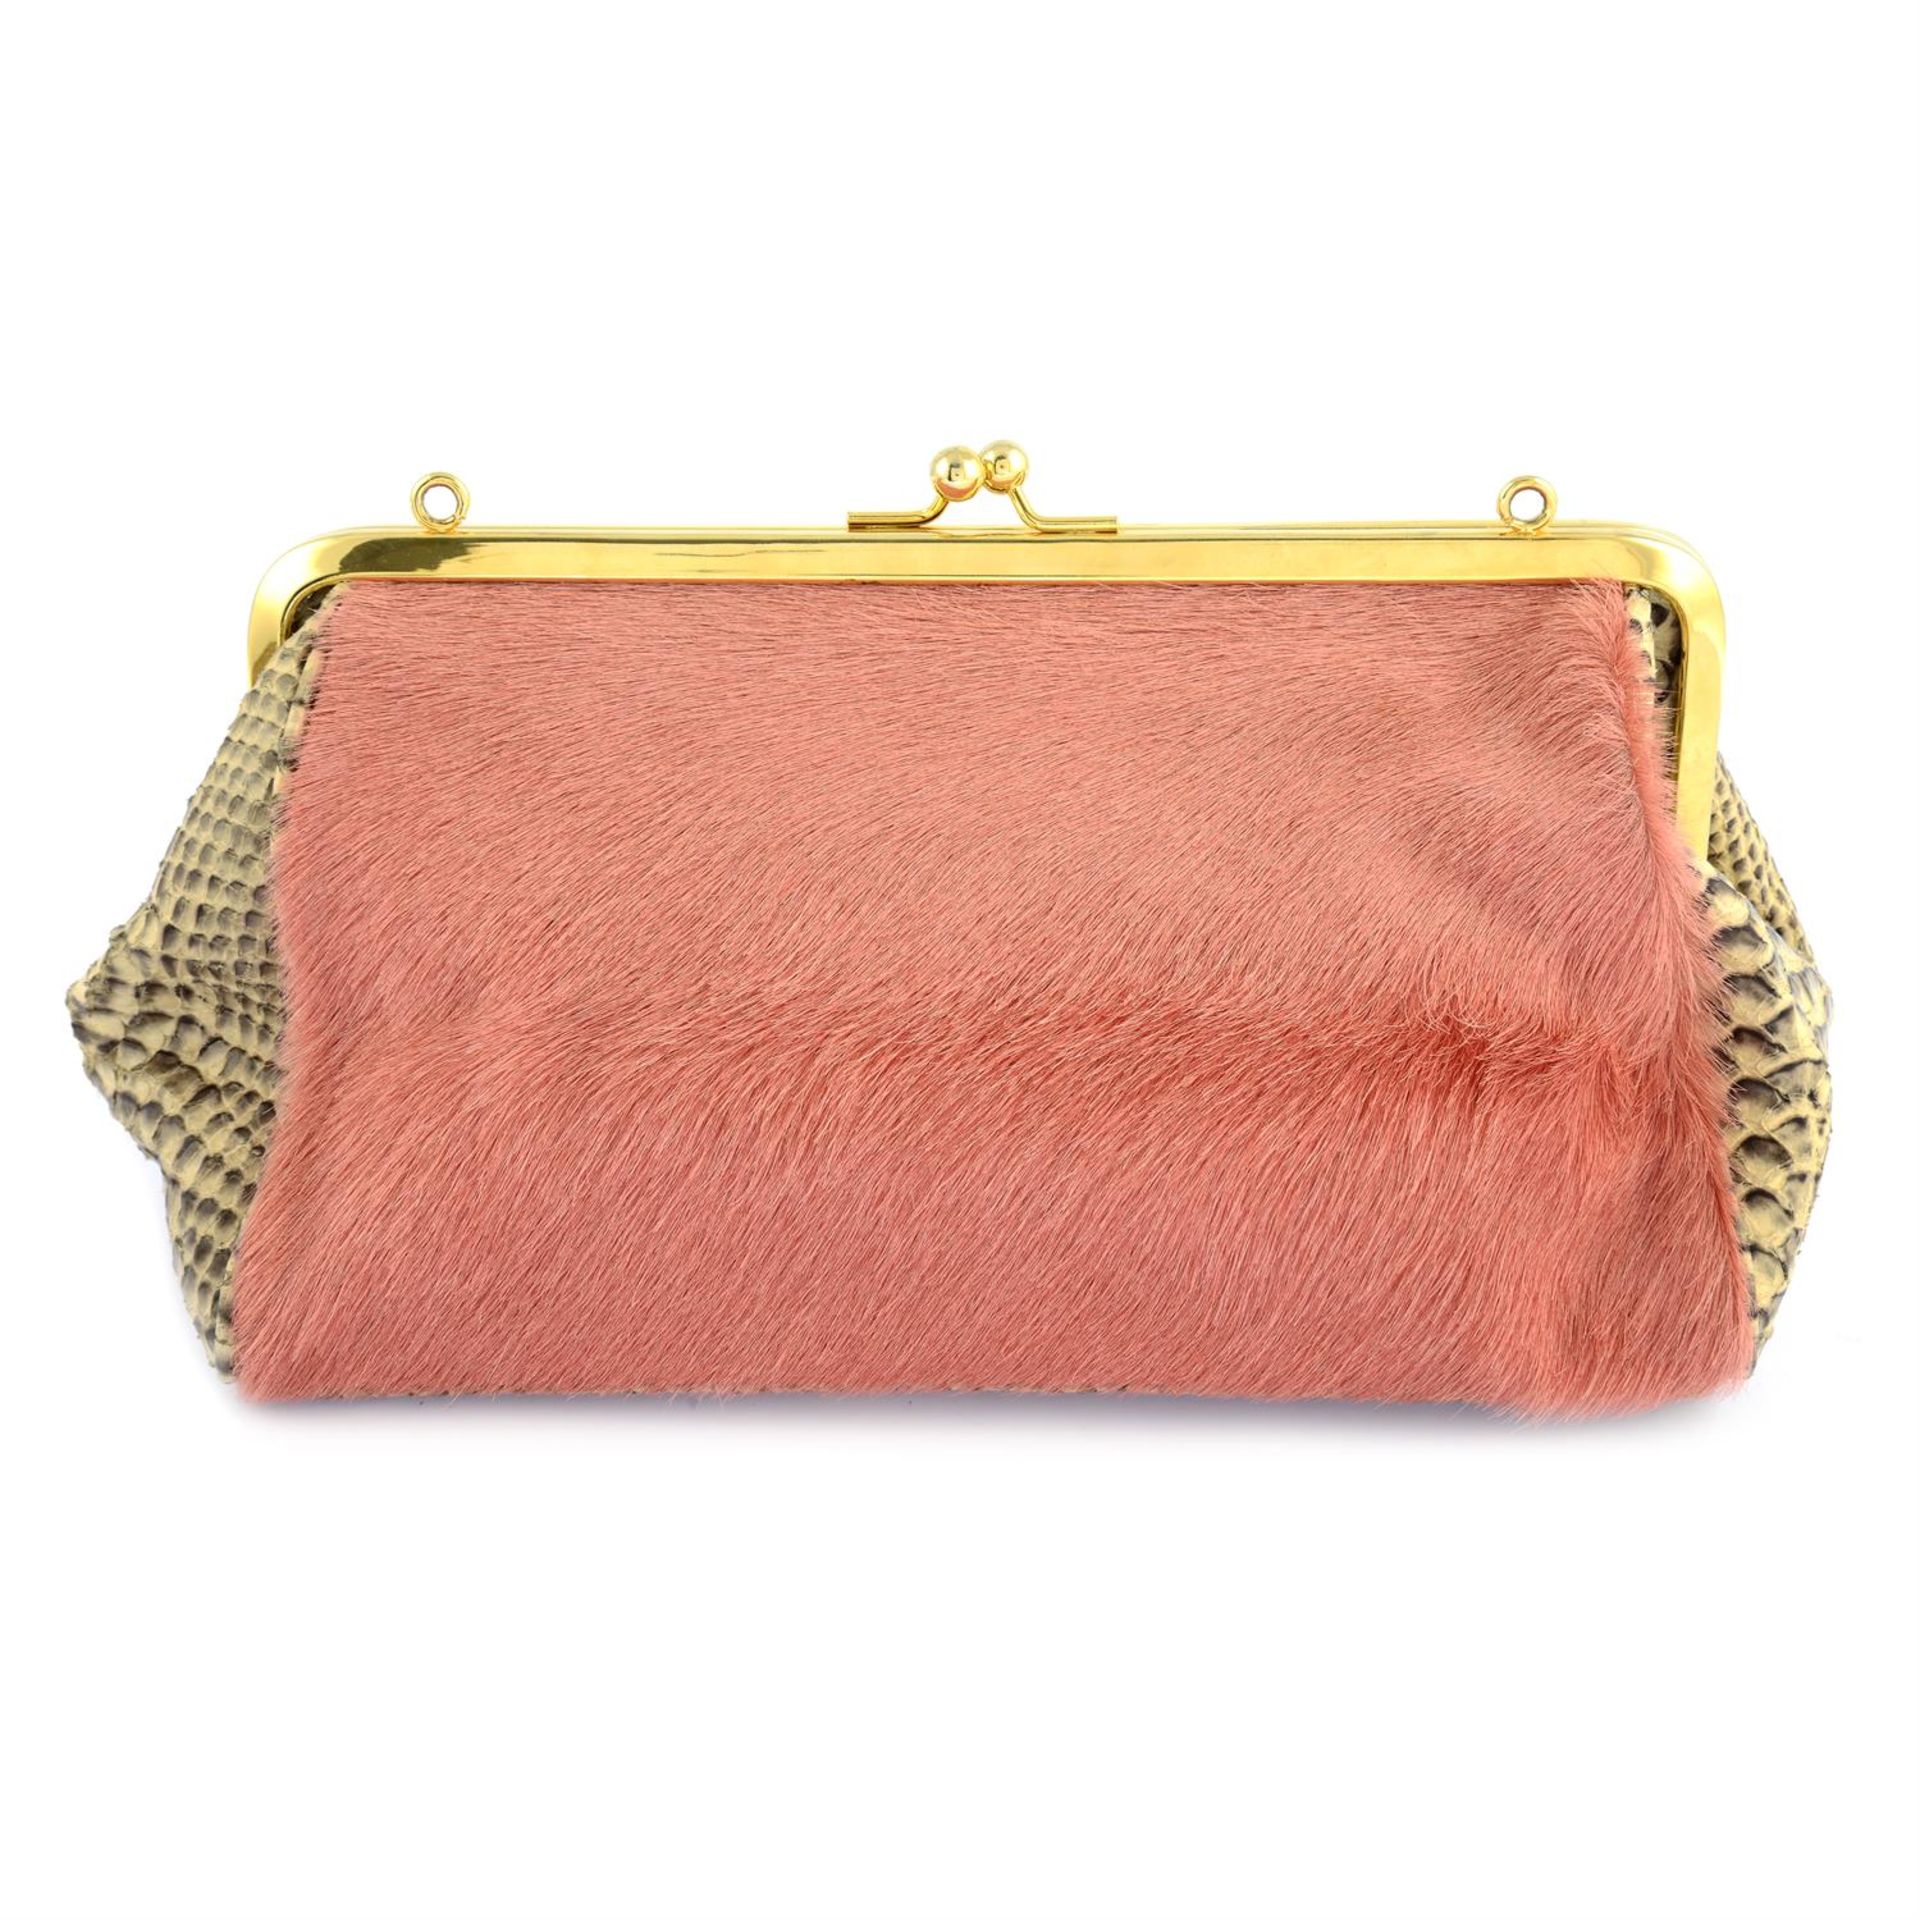 BERGE - a pink pony fur and snakes skin handbag.